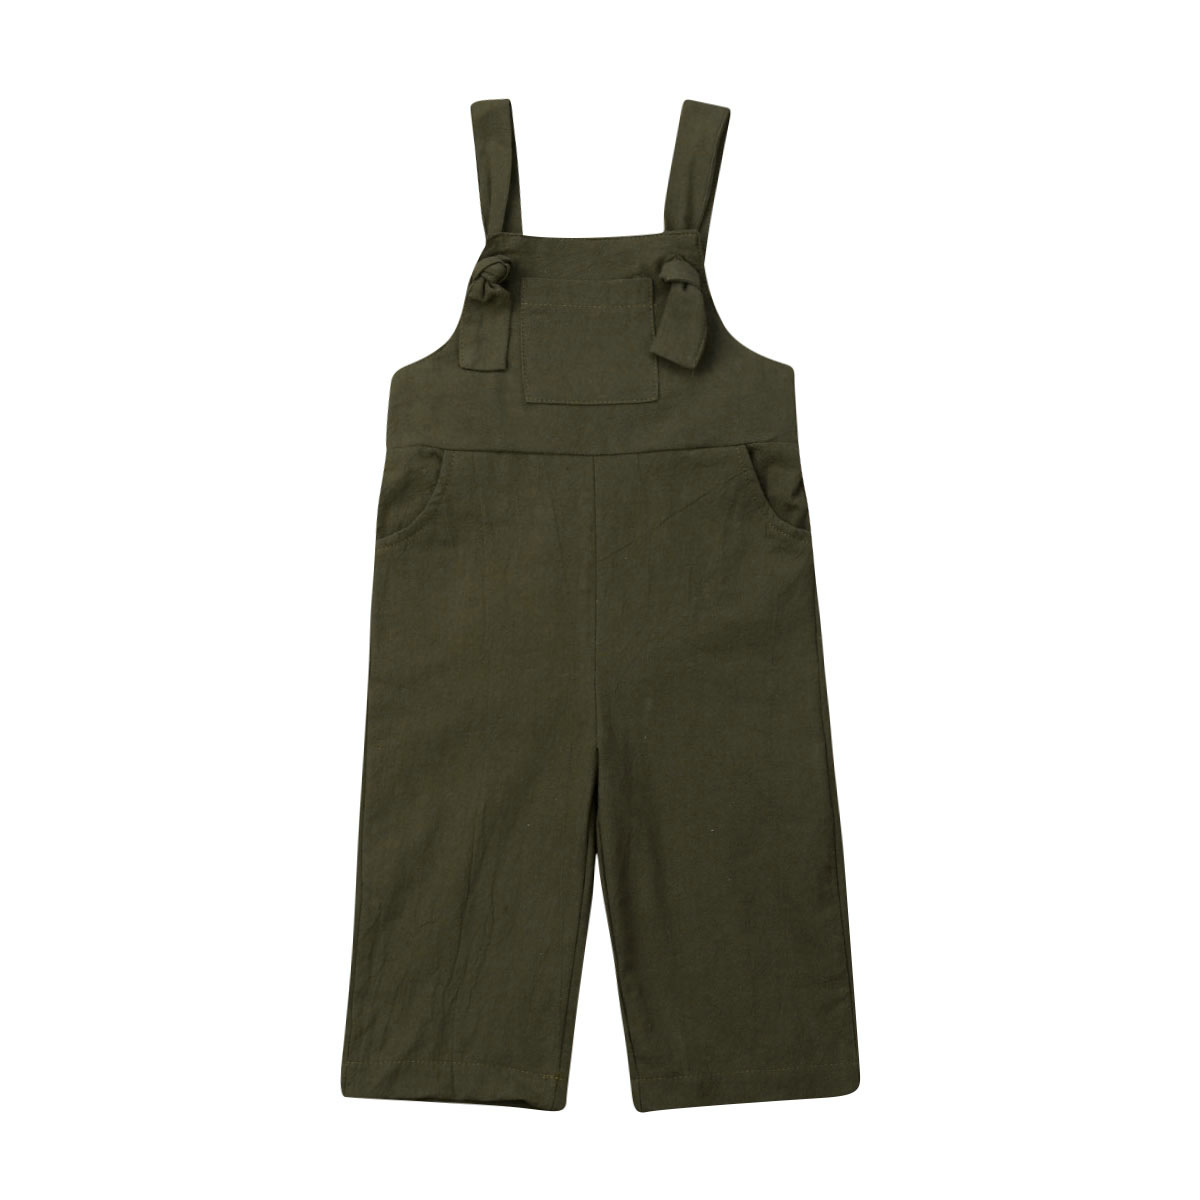 Toddler kid baby piger sommer overalls knude strappy ensfarvet linnebukser lange bukser tøj 1-6t: Grøn / 4t